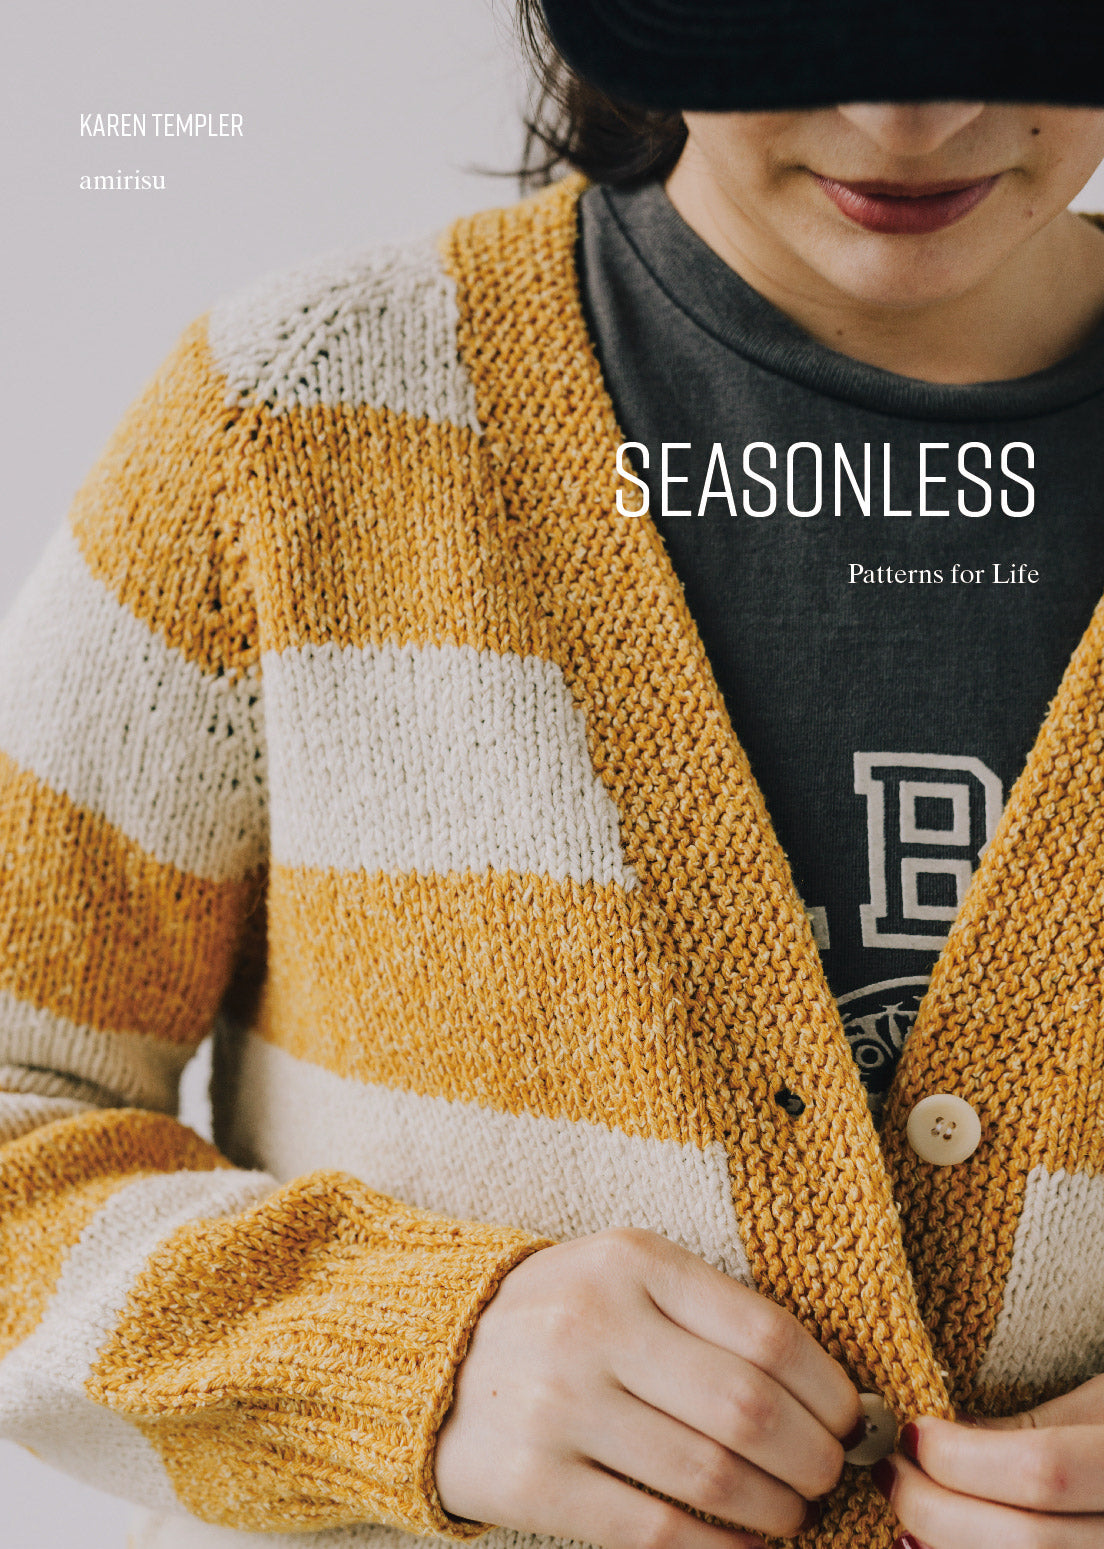 Seasonless - Patterns for Life | Karen Templer [Preorder]